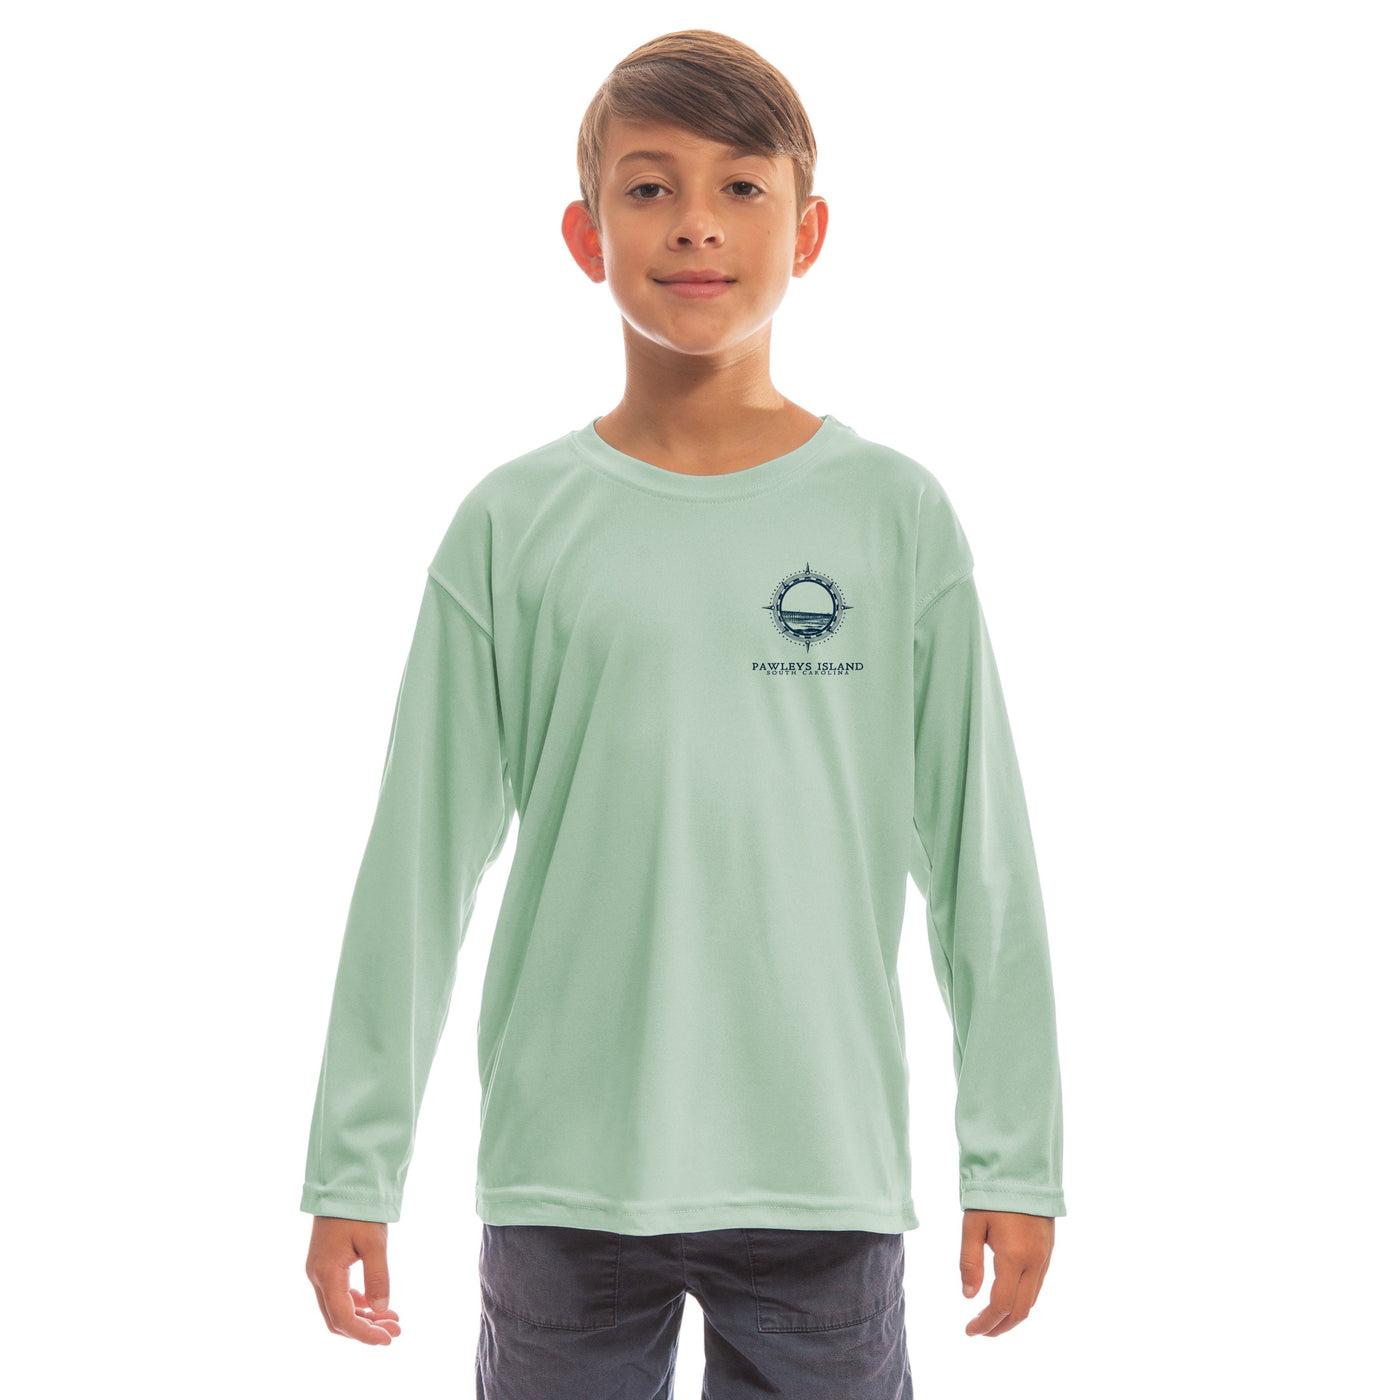 Compass Vintage Pawleys Island Youth UPF 50+ UV/Sun Protection Long Sleeve T-Shirt